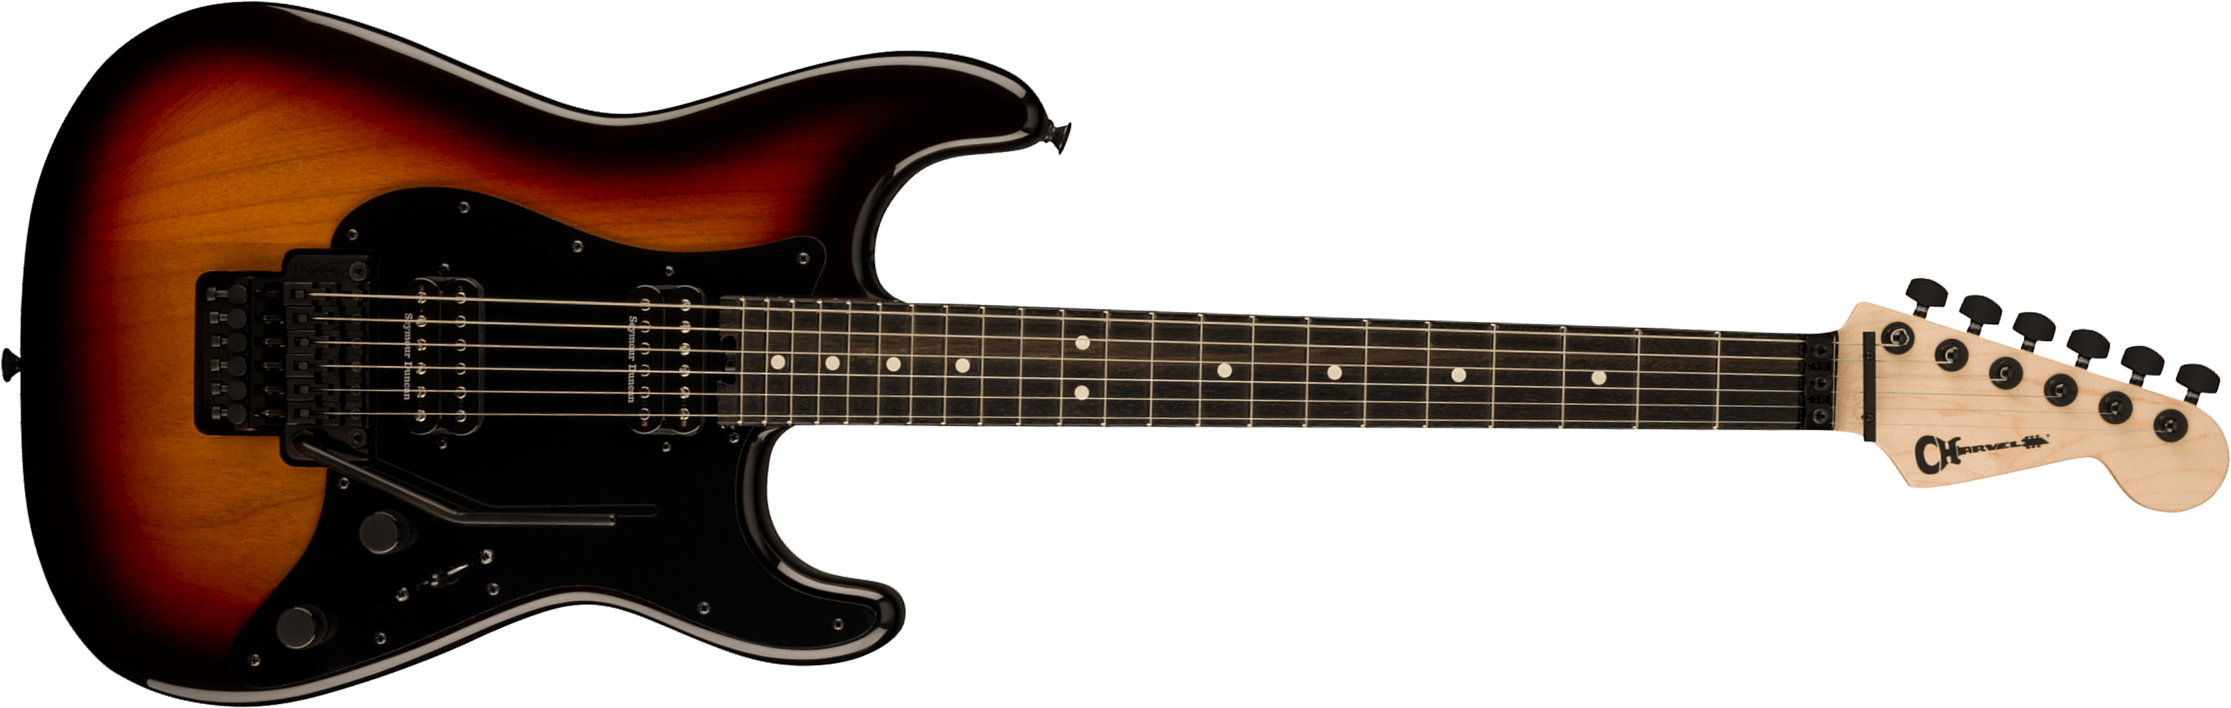 Charvel So-cal Style 1 Hh Fr E Pro-mod 2h Seymour Duncan Eb - Three-tone Sunburst - Str shape electric guitar - Main picture